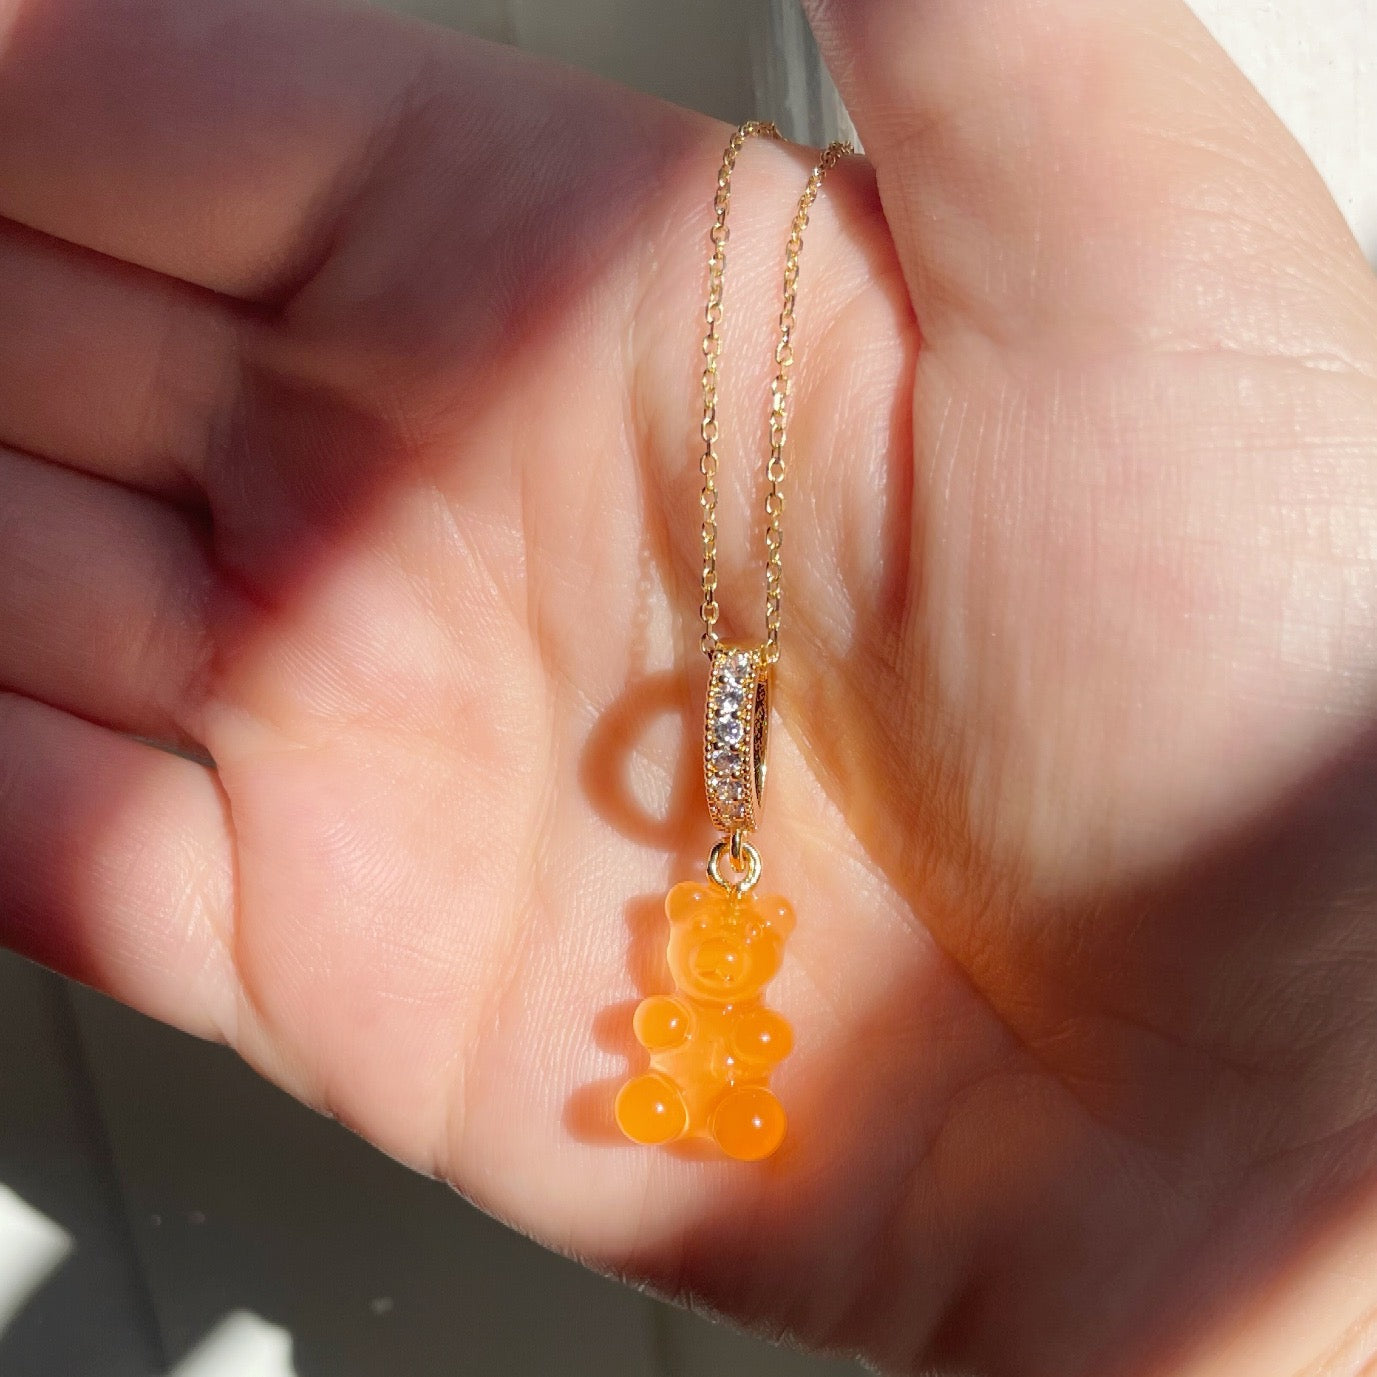 Gummy bear charm necklace gold chain